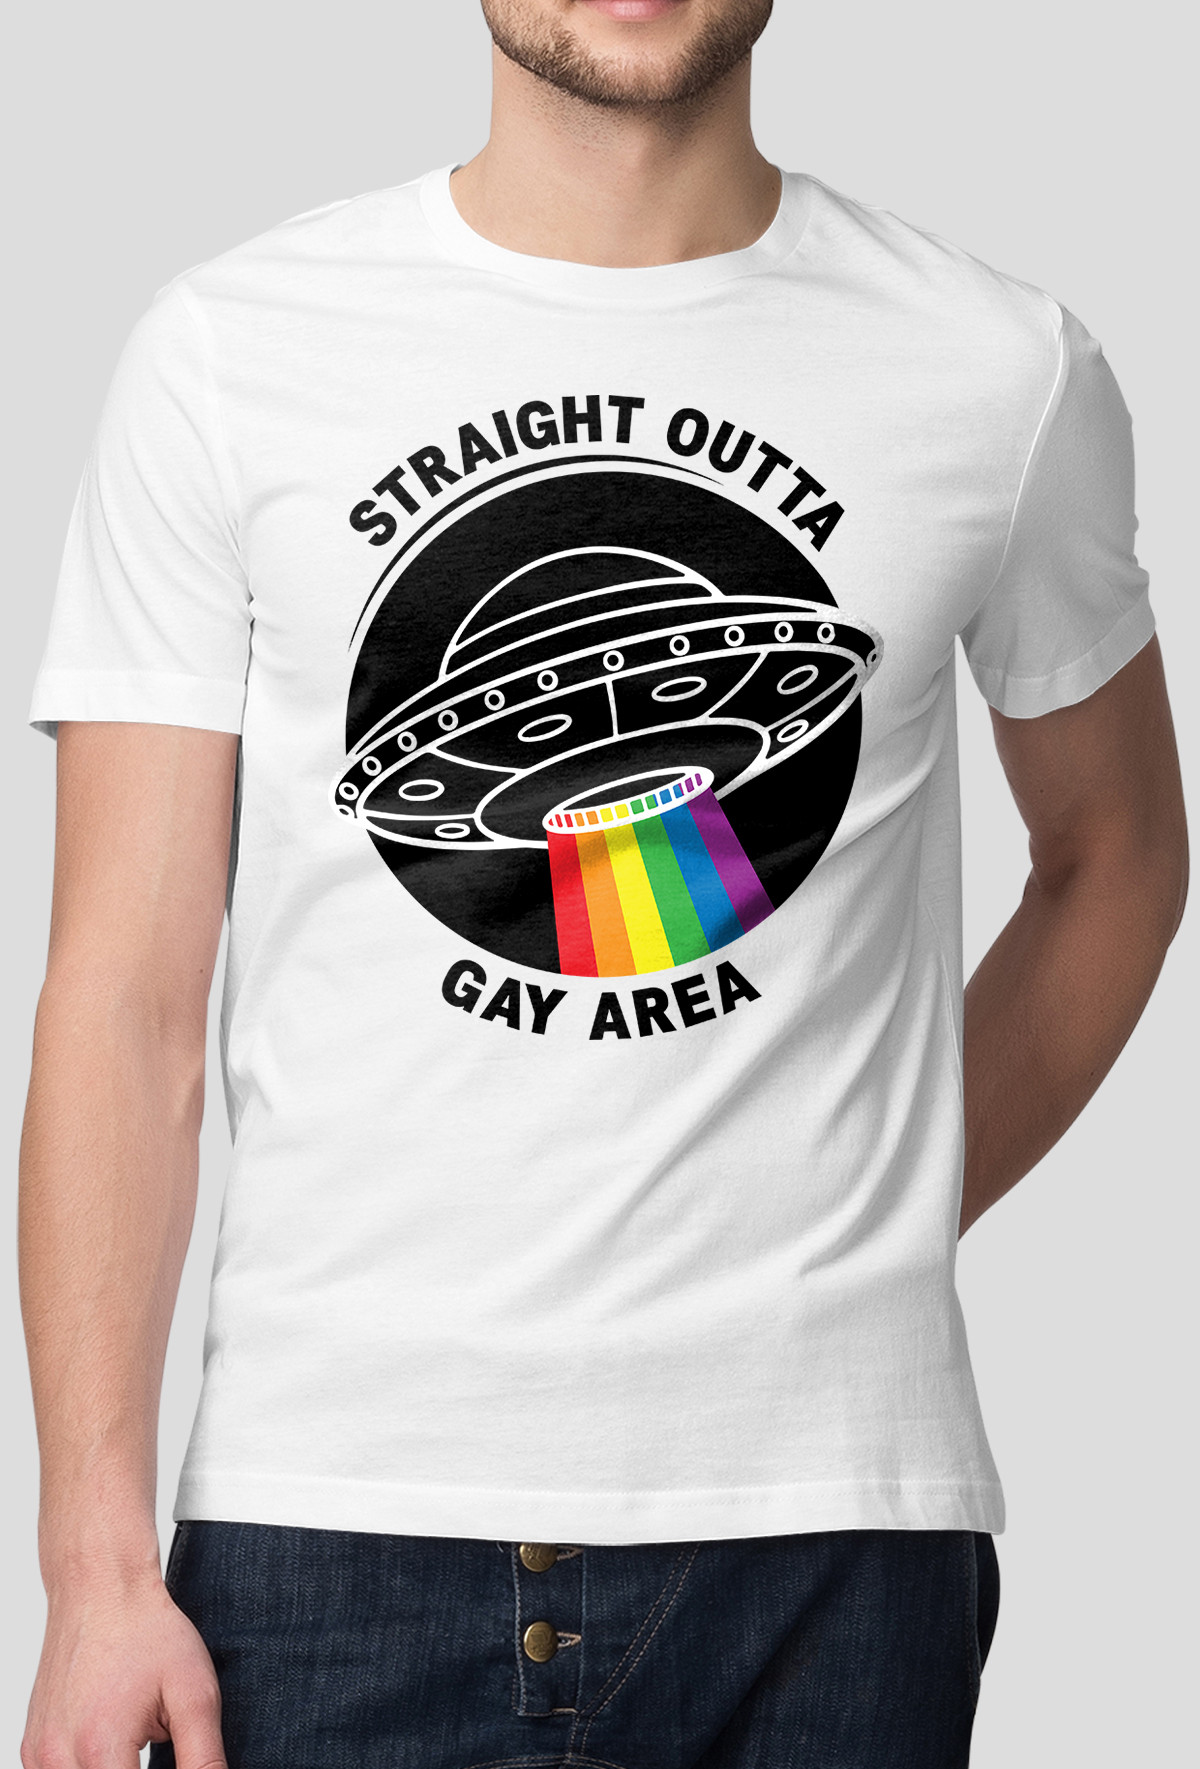 Koszulka - Straight outta gay area (Oryginalny Prezent)